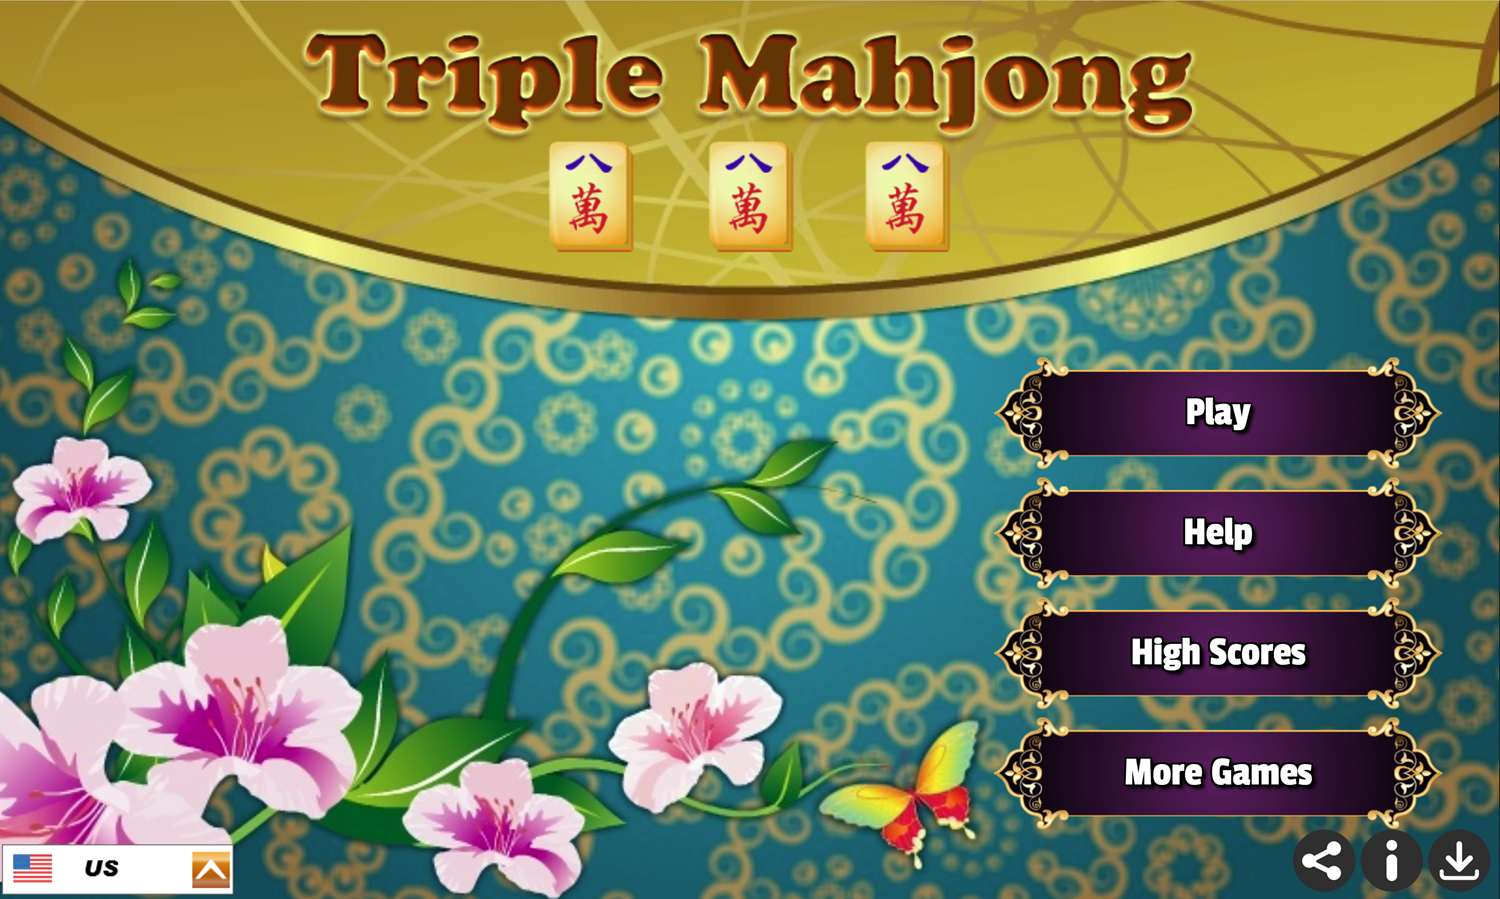 Triple Mahjong Game Welcome Screen Screenshot.